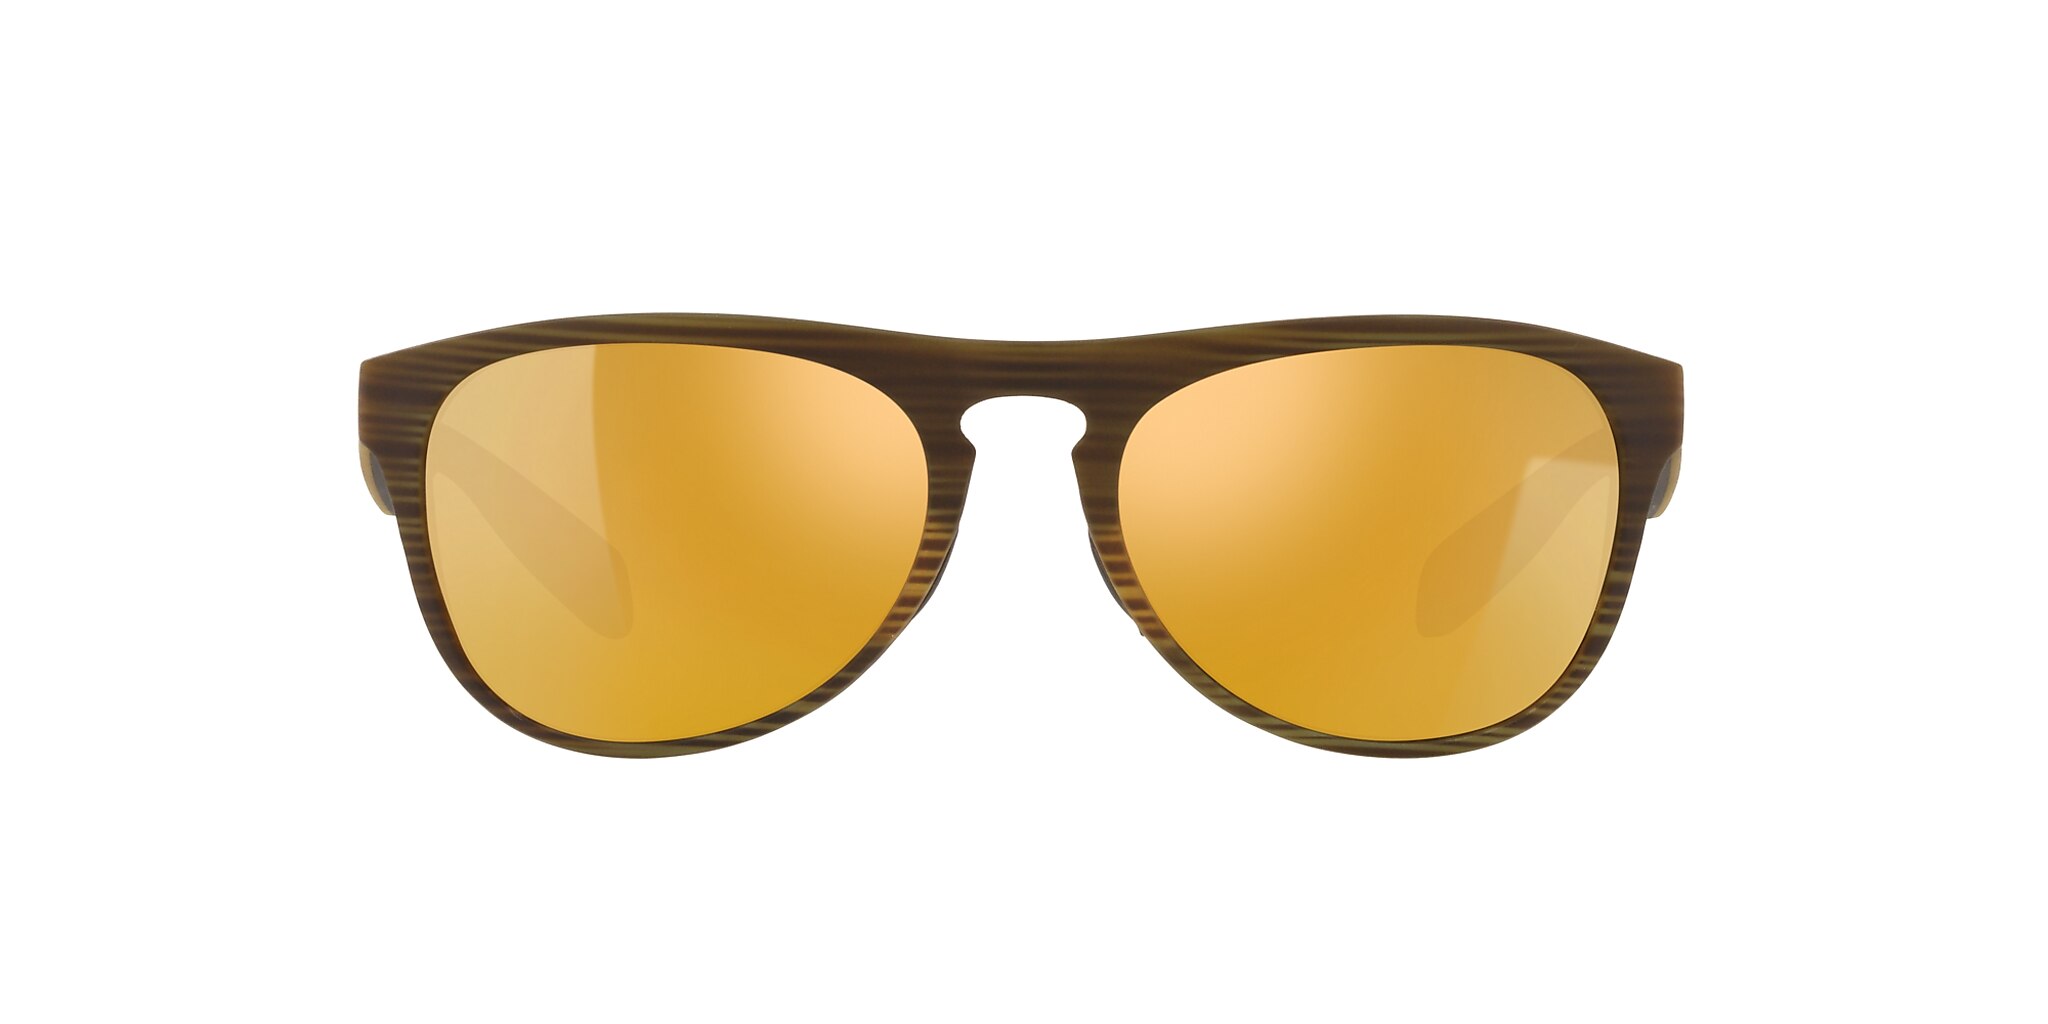 Sanitas Sunglasses in Bronze Reflex | Native Eyewear®